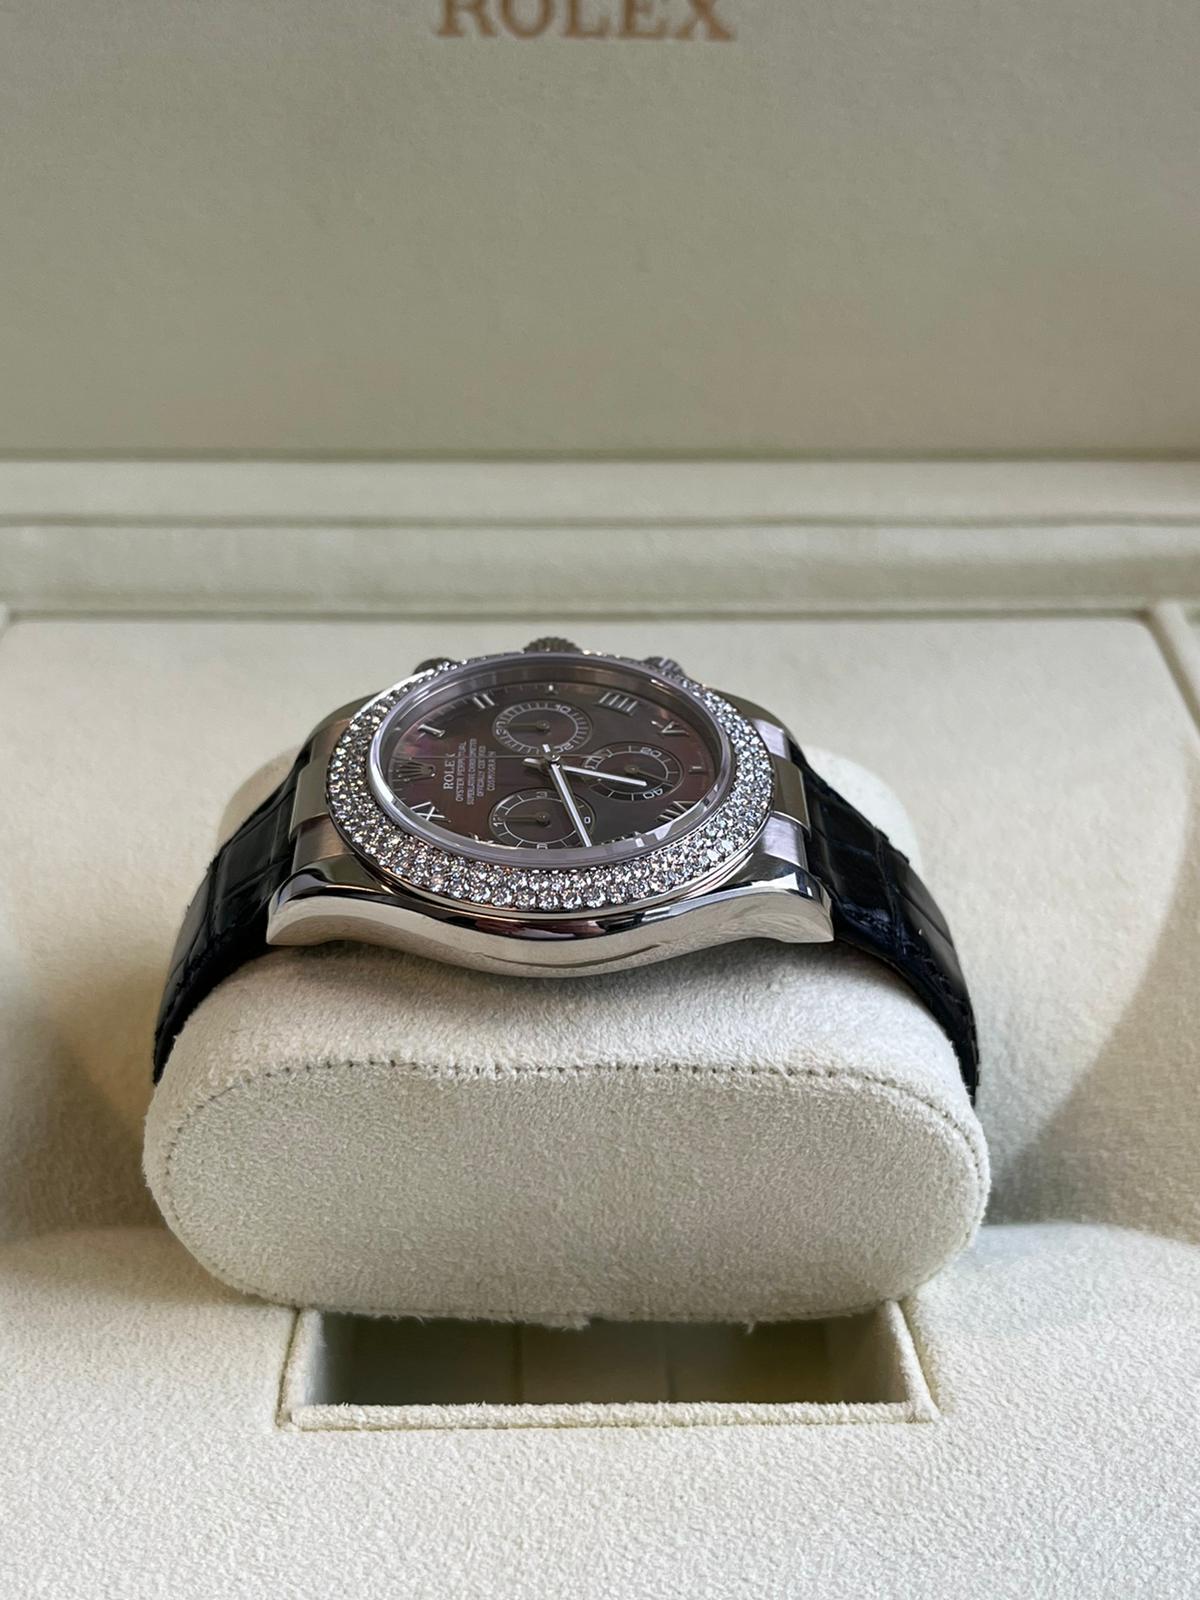 Rolex Daytona Cosmograph White Gold MOP Diamond Bezel Watch 116589RBR For Sale 11